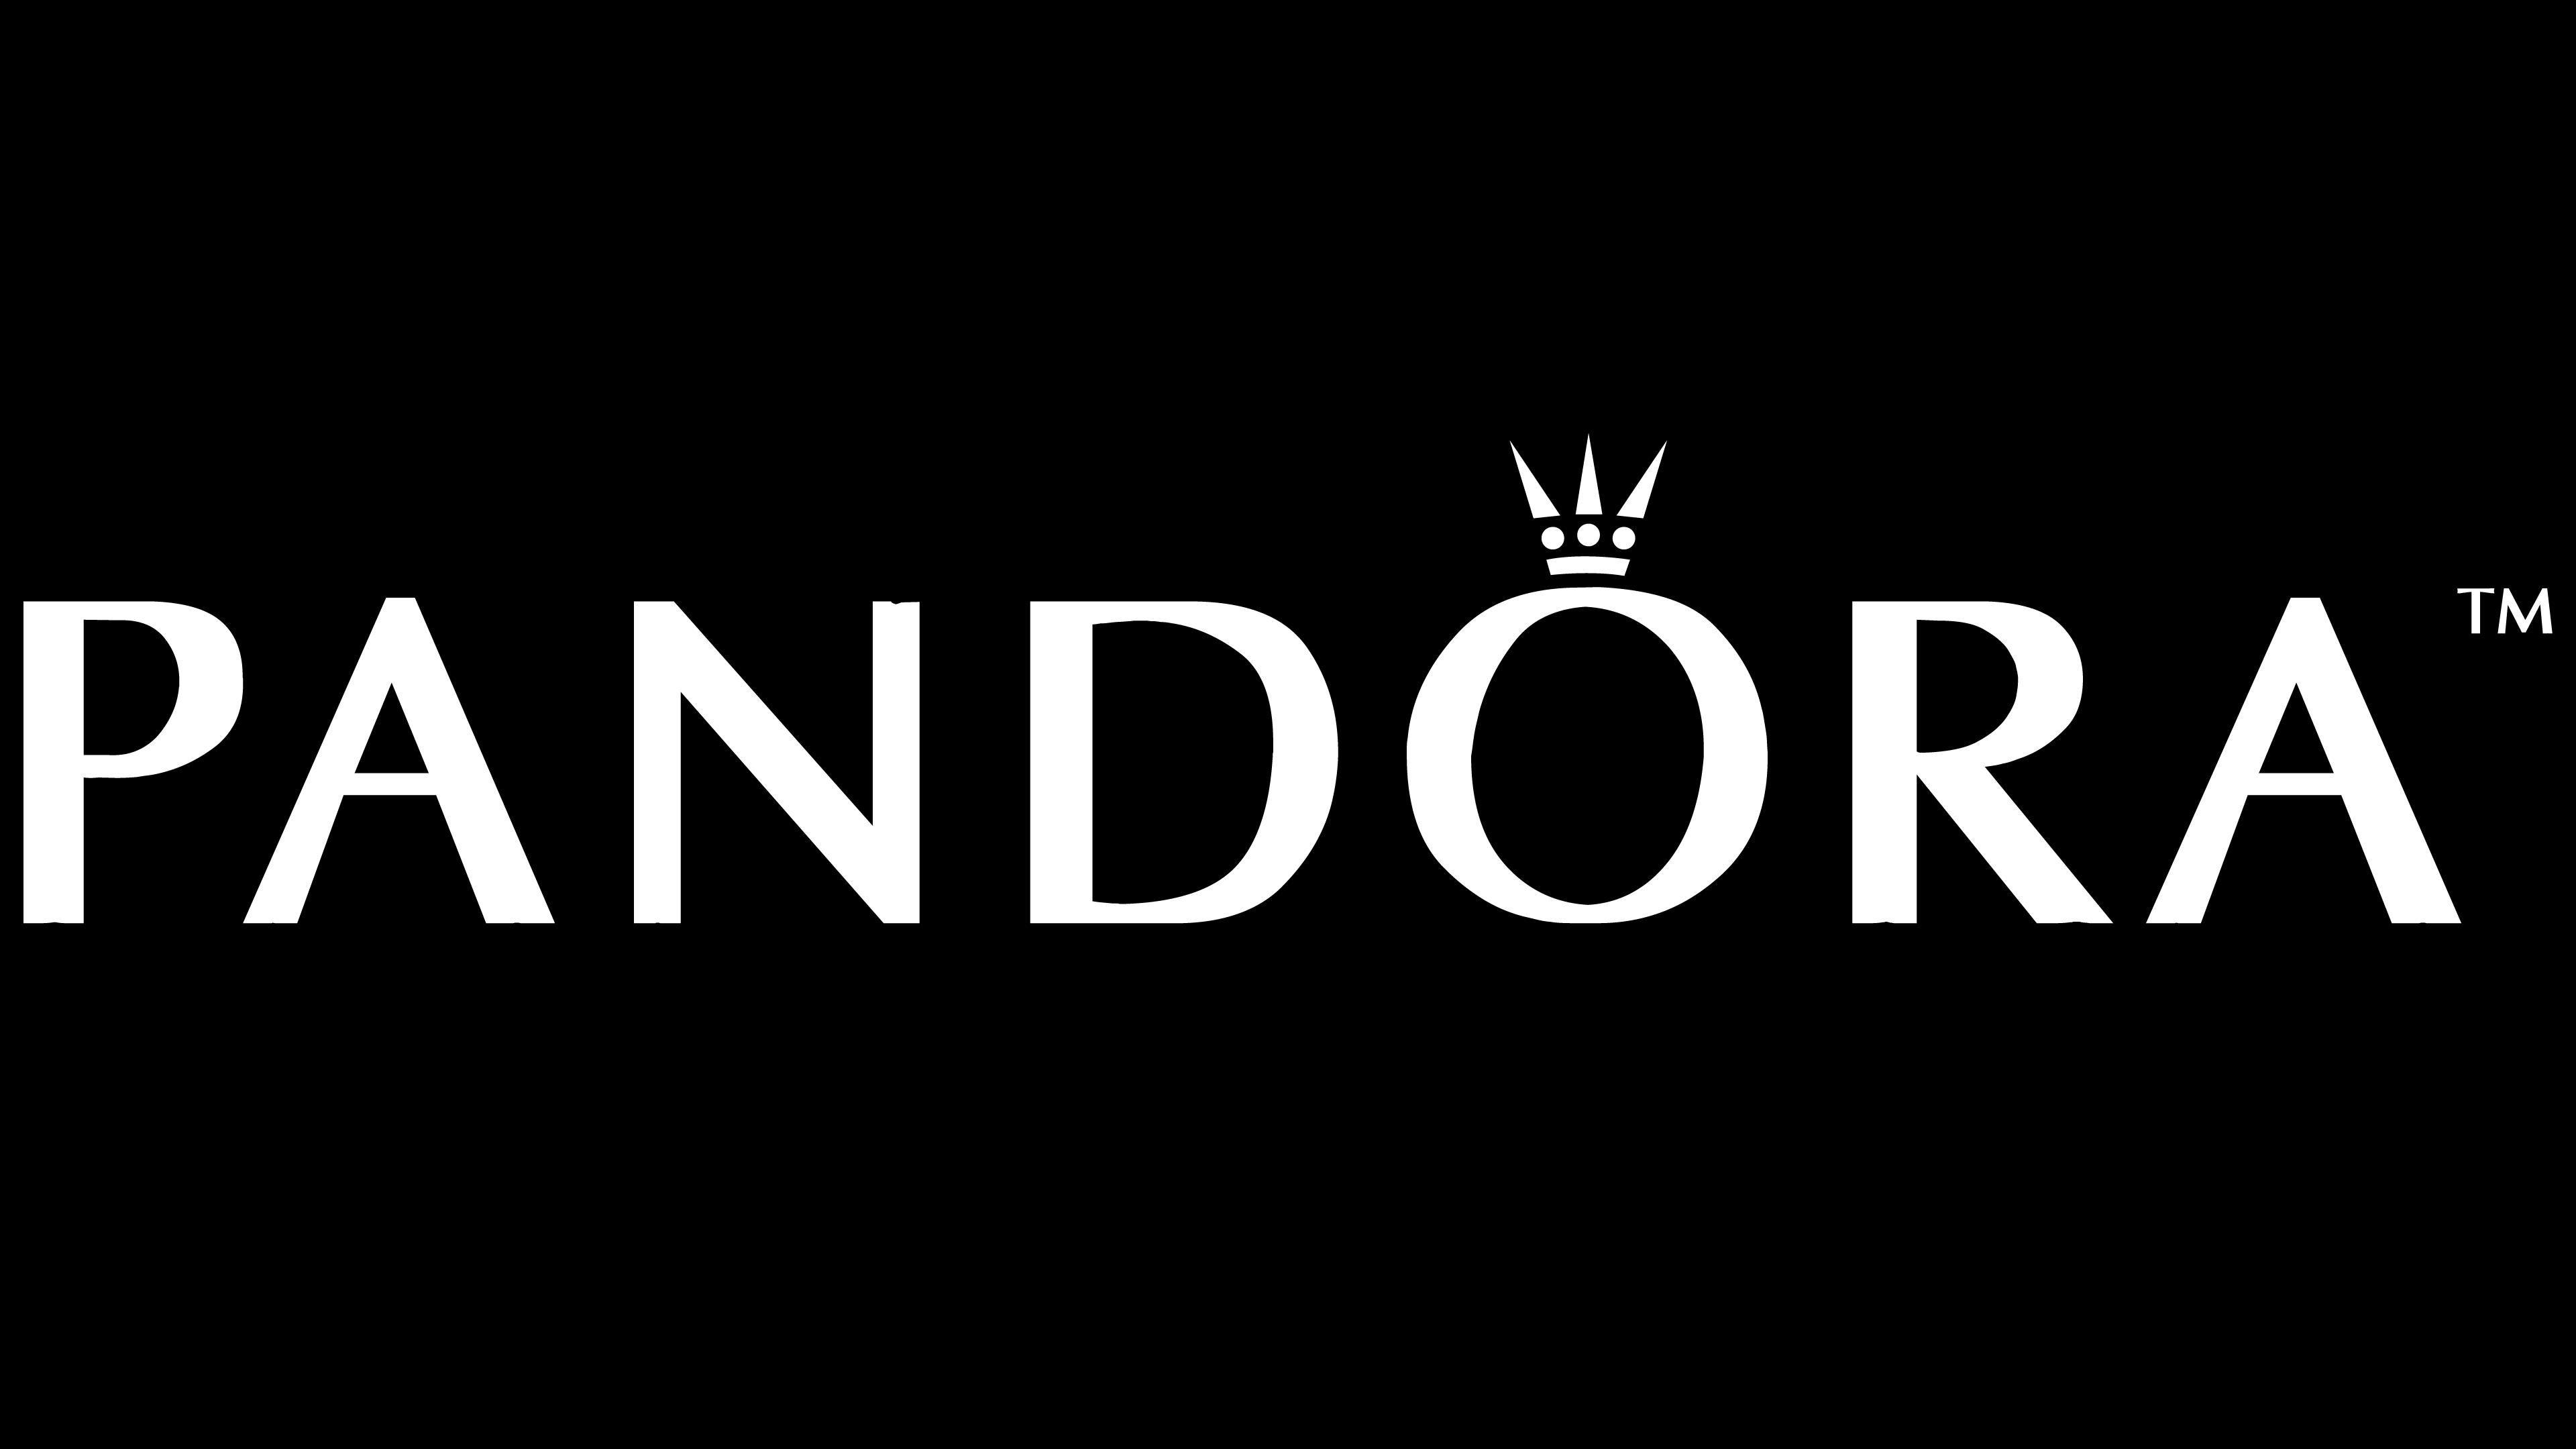 Pandora Logo PNG Image in Transparent